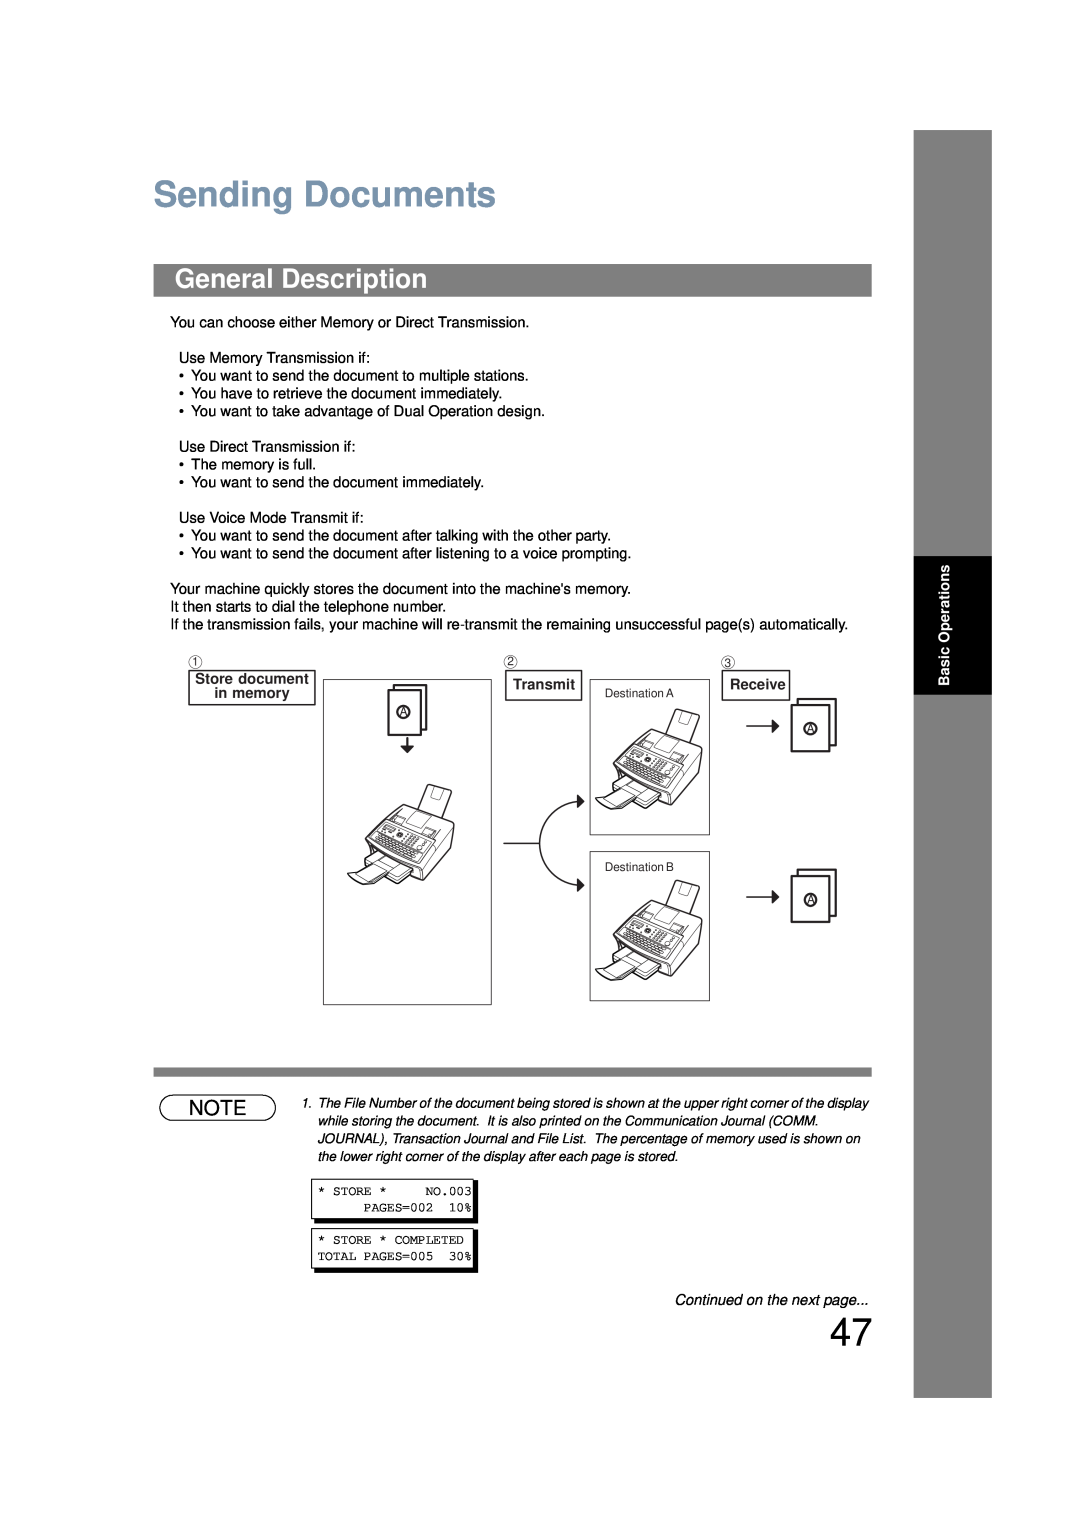 Panasonic UF-6200 Sending Documents, General Description, Operations, Store document in memory, Transmit, Receive, Basic 